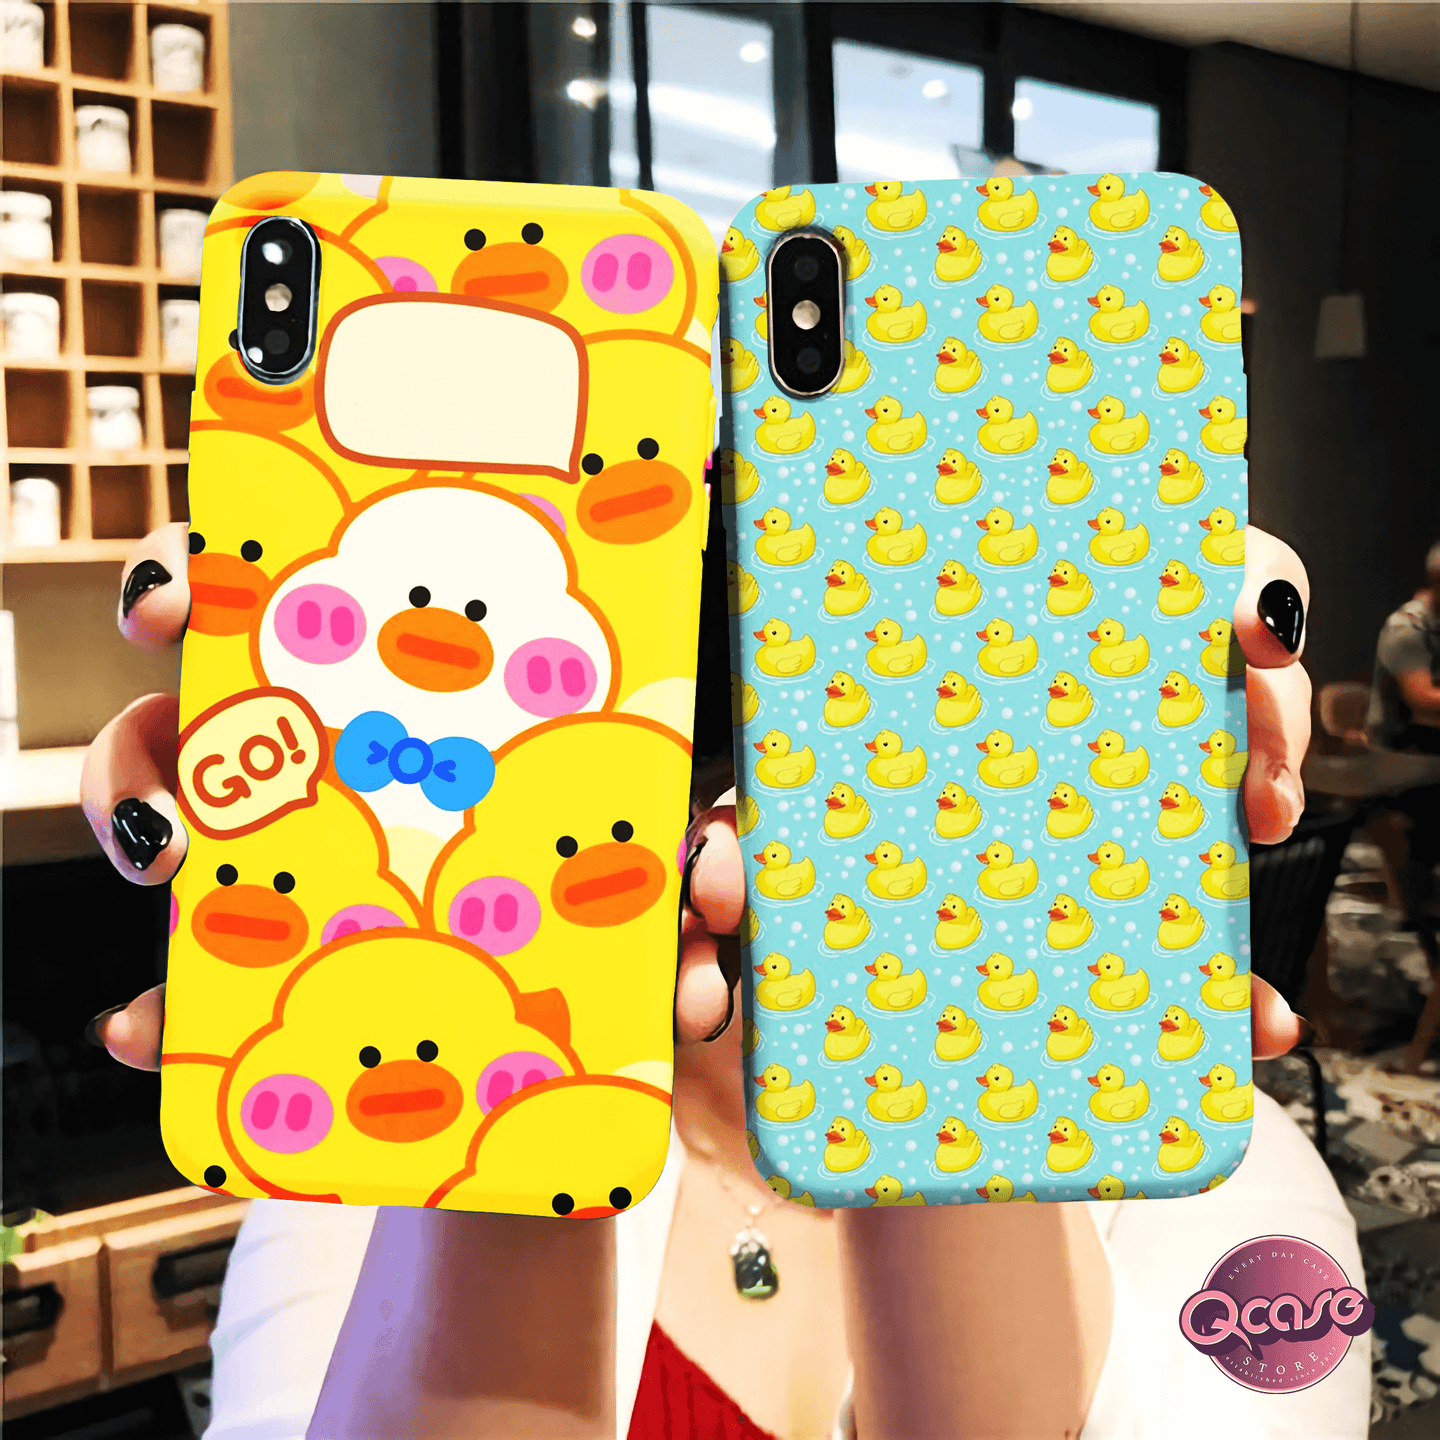 Yellow Ducks on Phone Covers